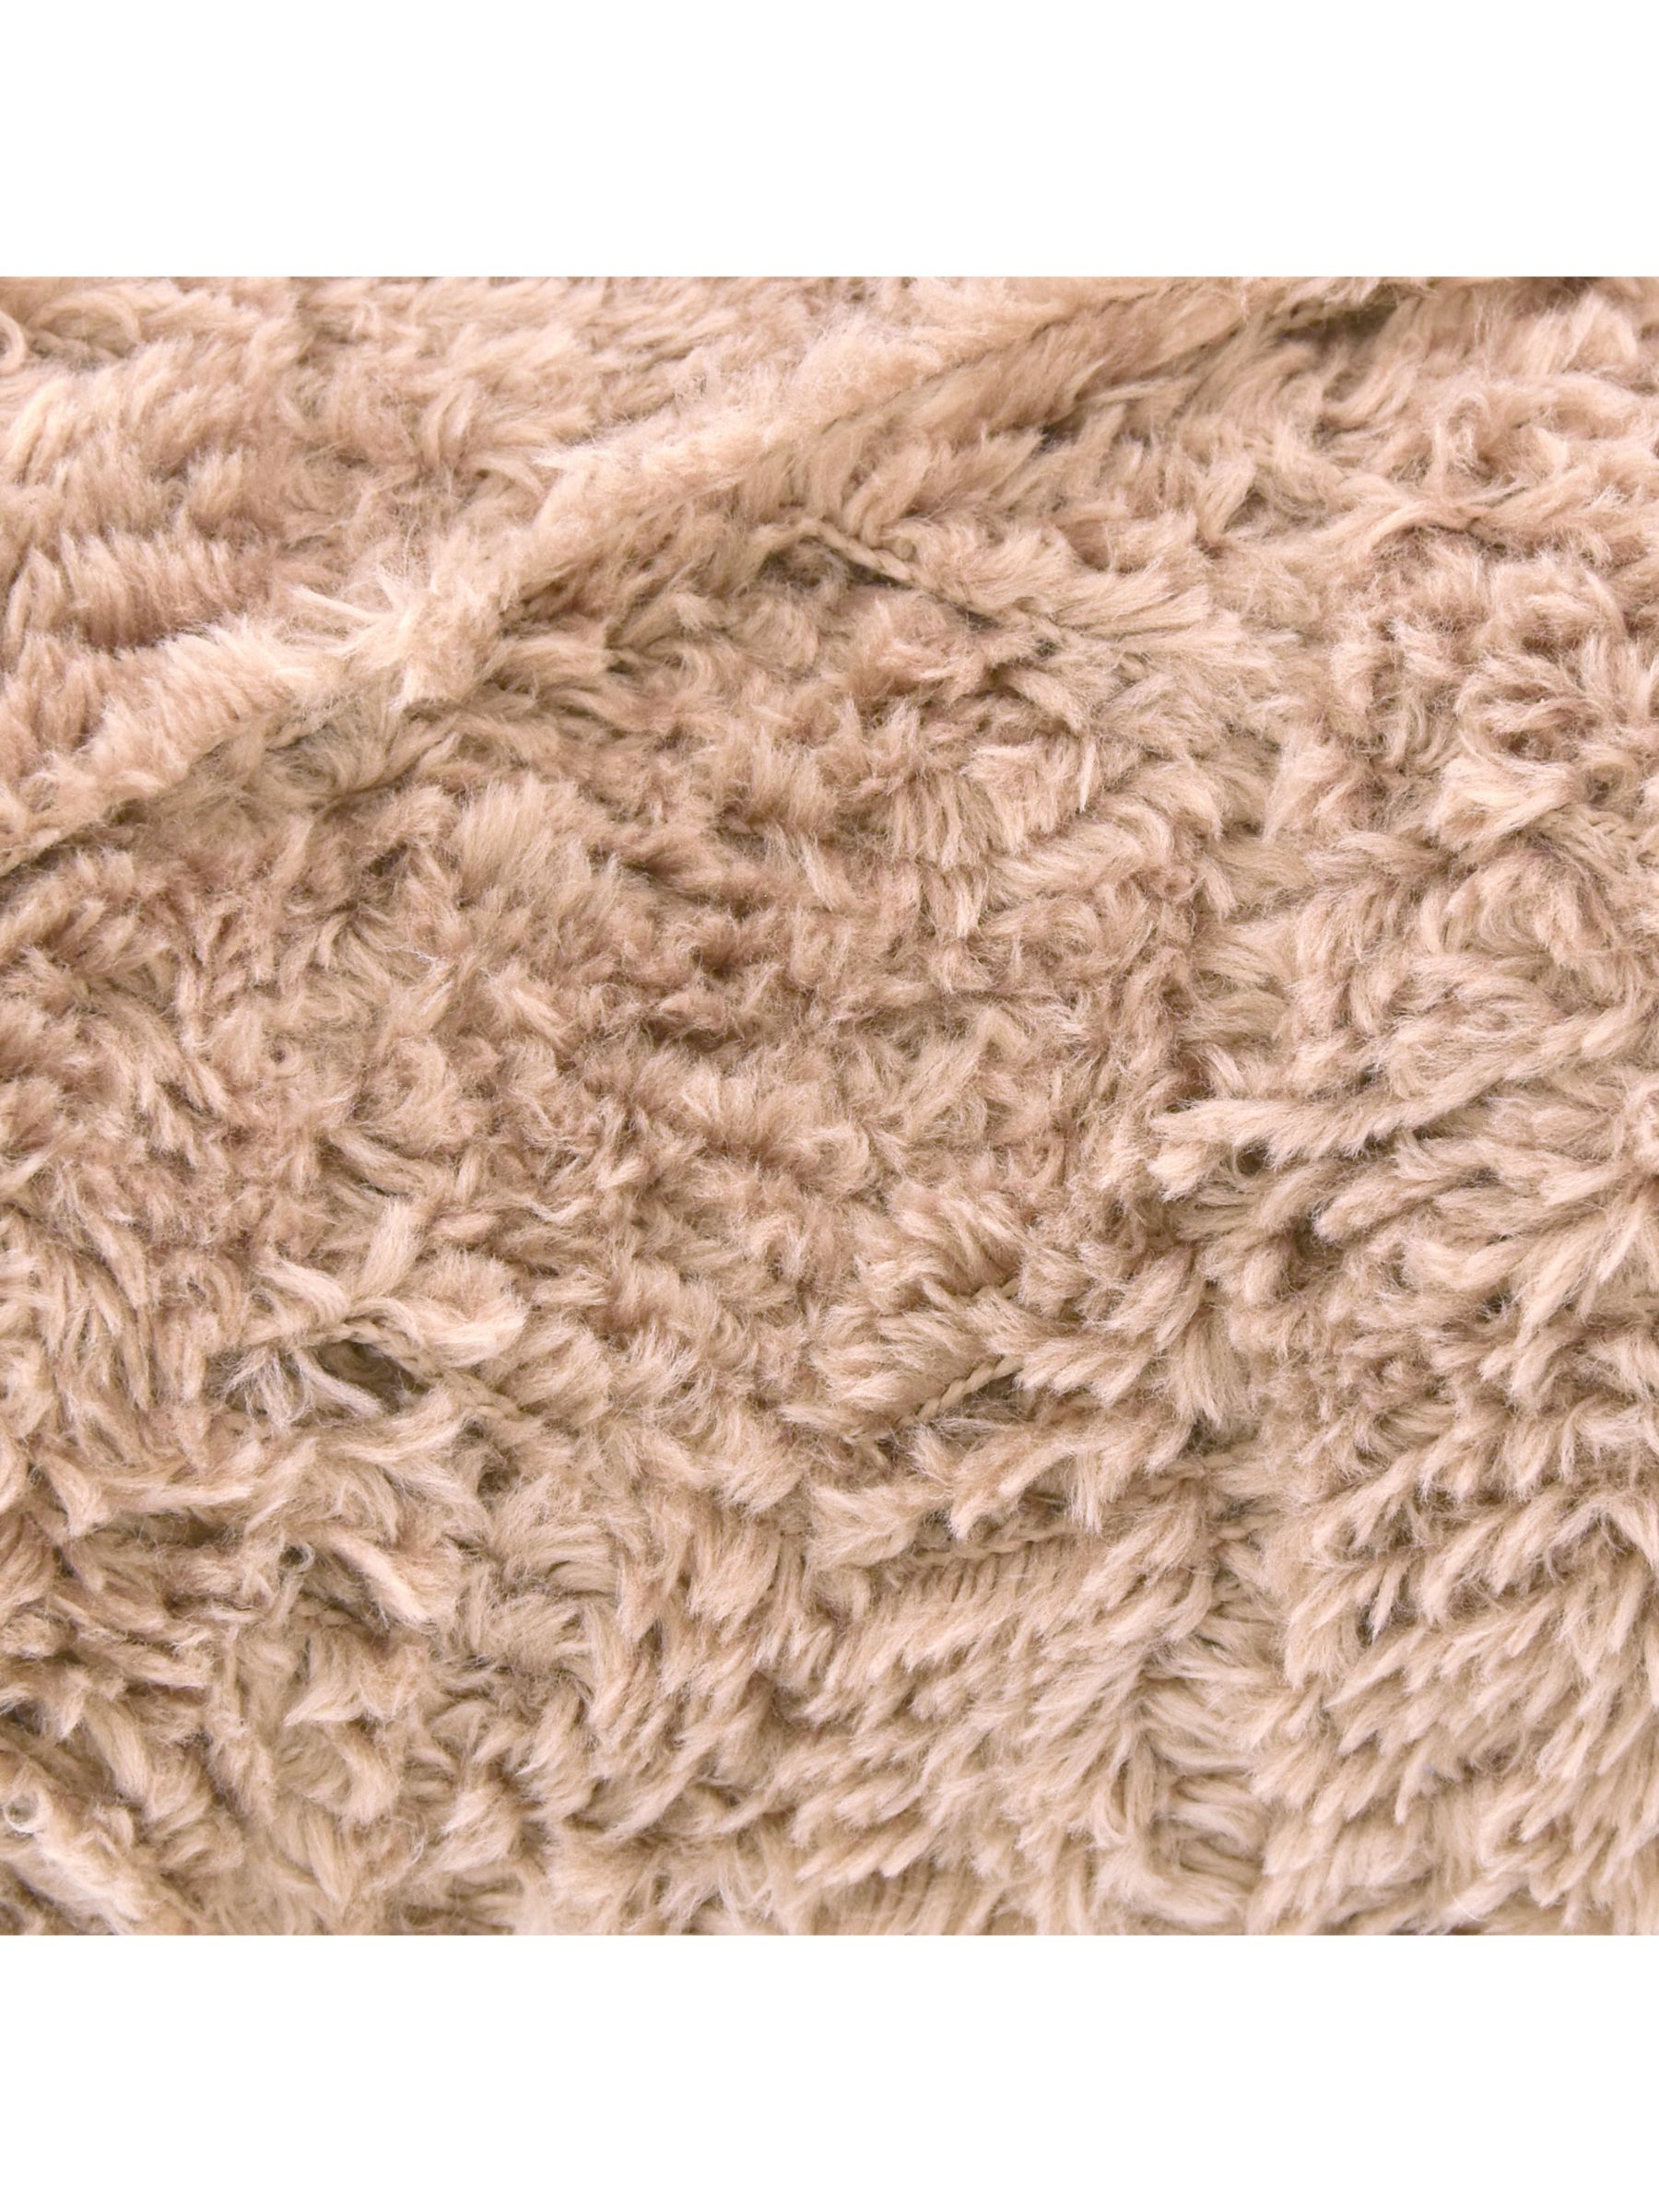 Lion Brand Wool-Ease Yarn - Grey Heather, Multipack of 10